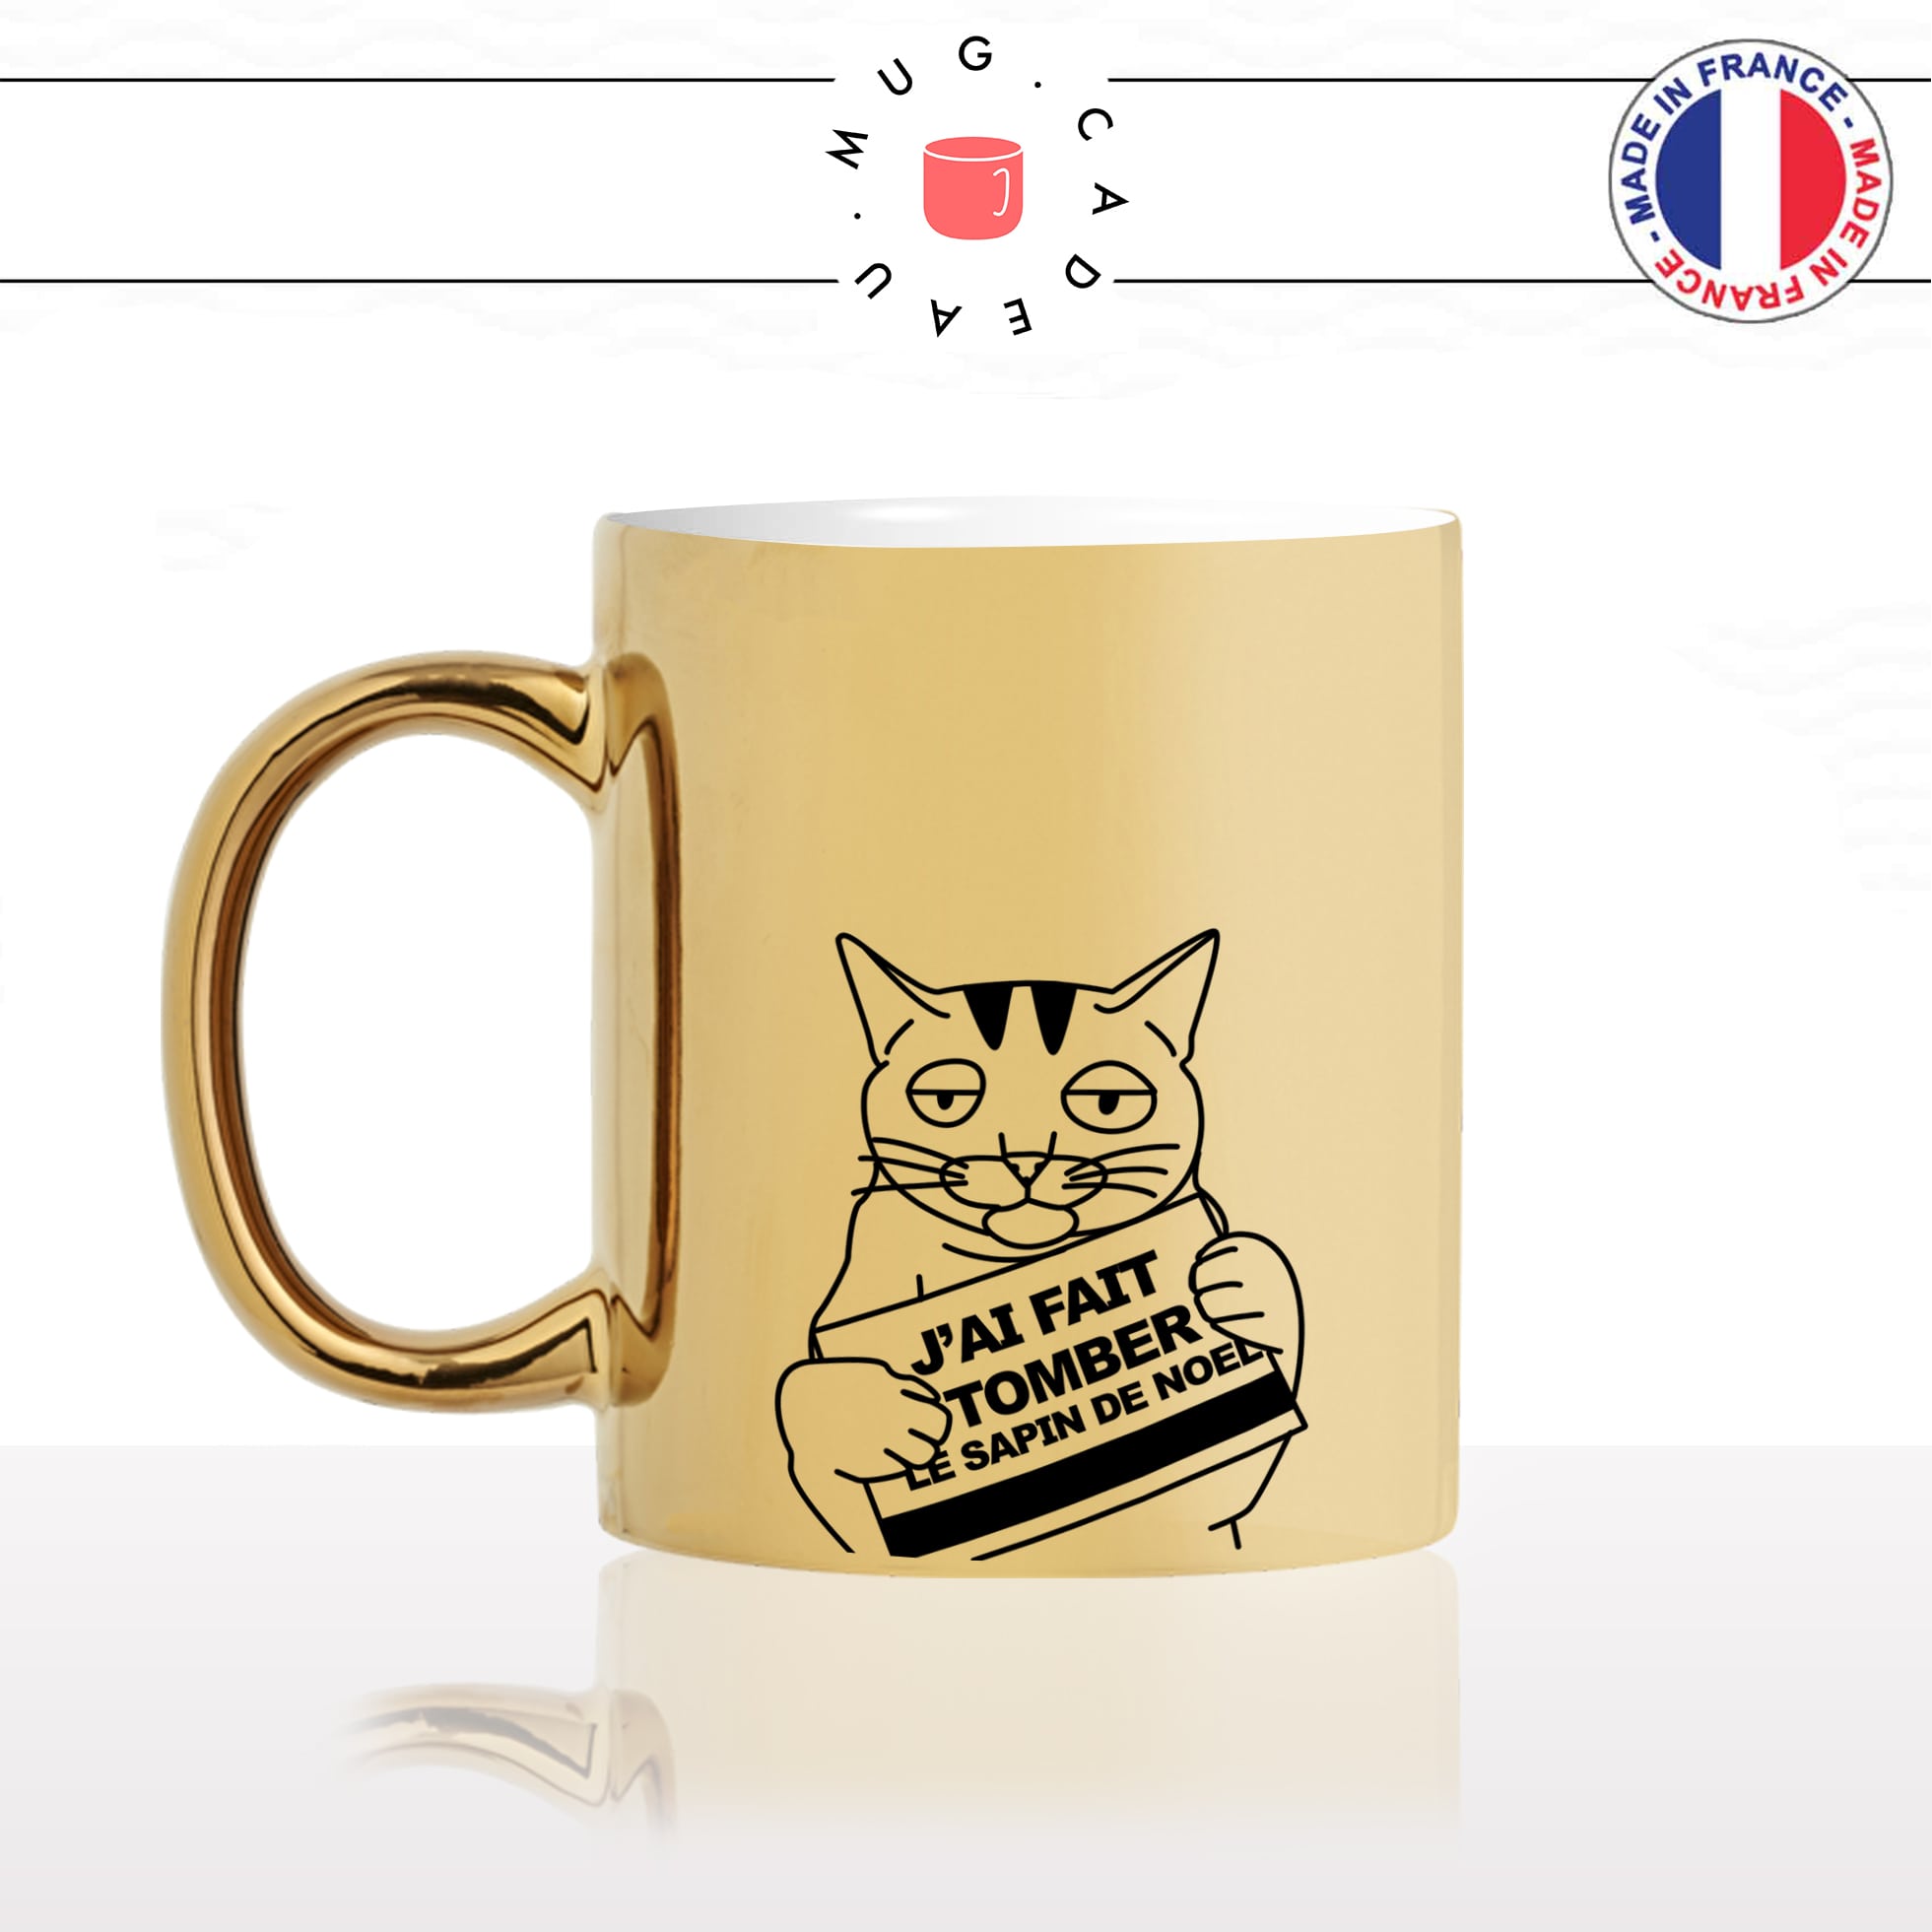 mug-tasse-or-doré-sapin-de-noel-christmas-tree-chats-mignon-animal-chaton-dessin-noir-fun-café-thé-idée-cadeau-original-personnalisable-gold-min